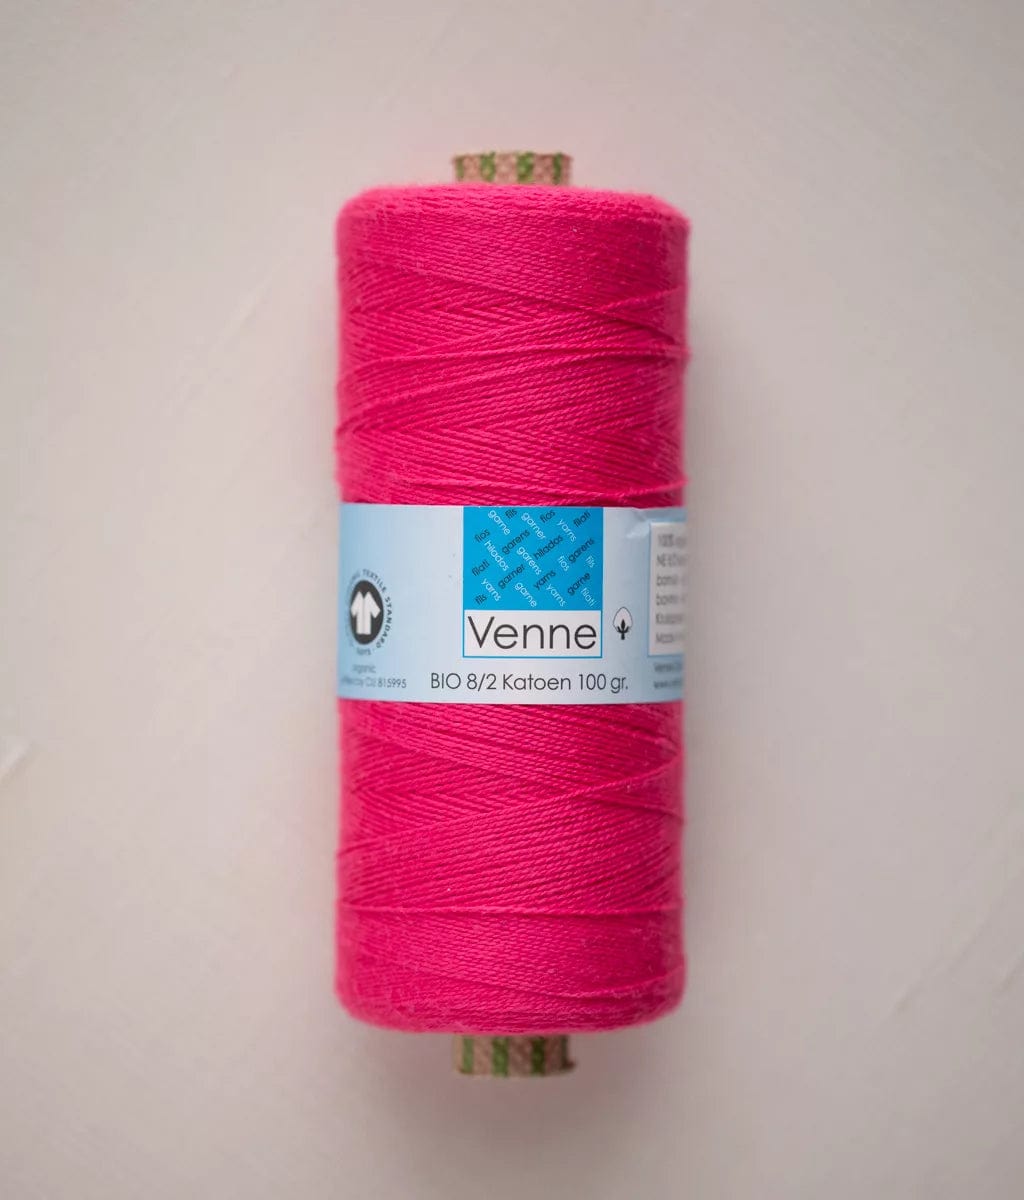 Venne Weaving Yarn Bright Pink Venne 8/2